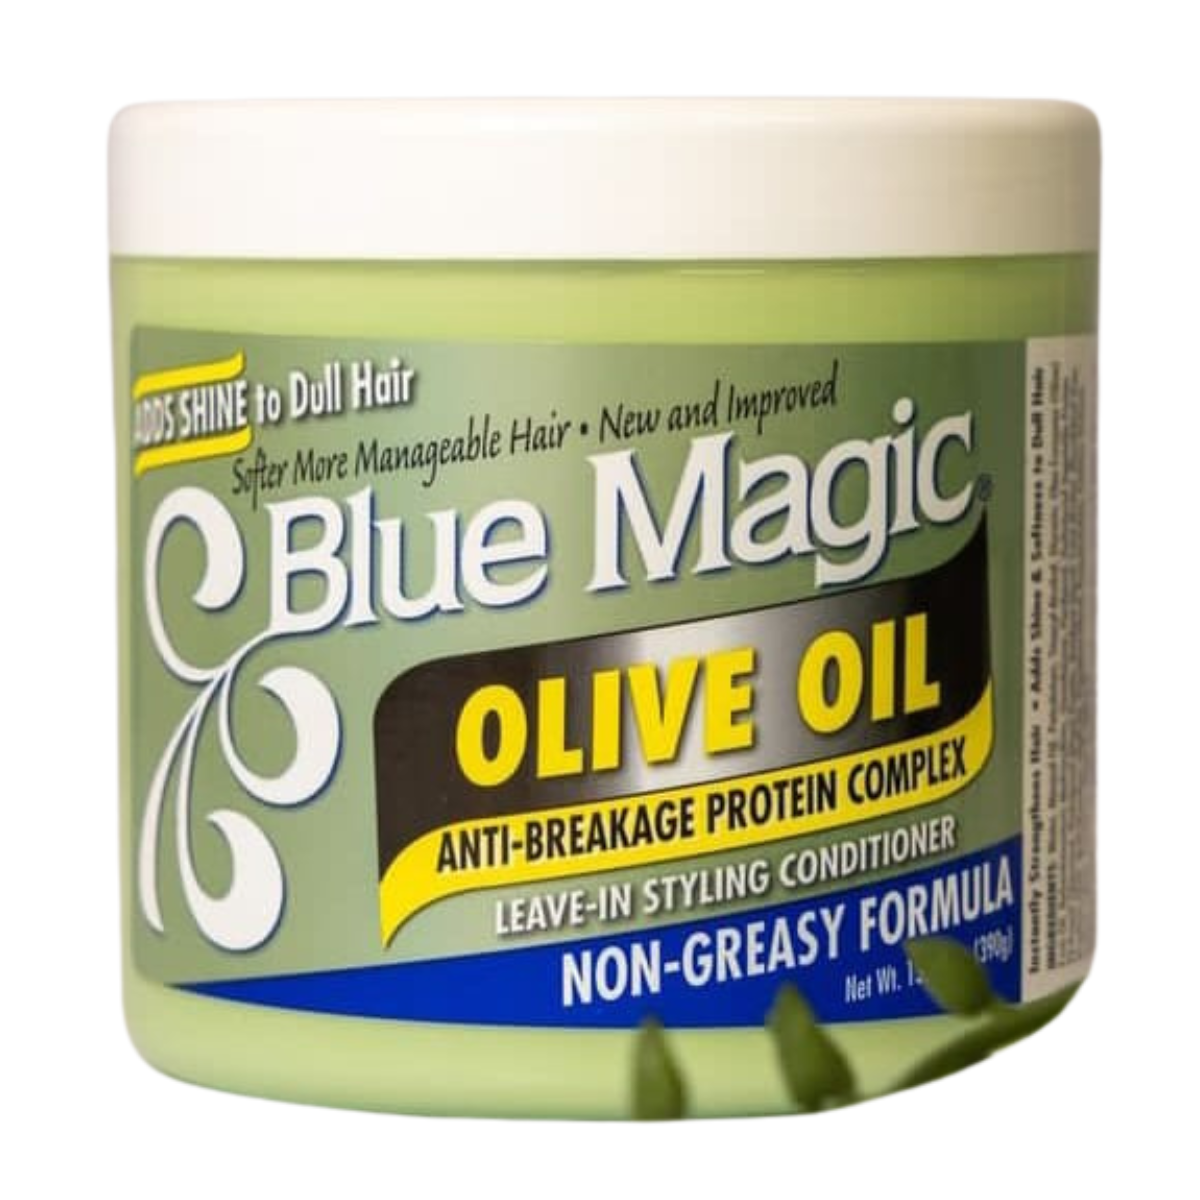 blue Magic olive oil comprar en onlineshoppingcenterg Colombia centro de compras en linea